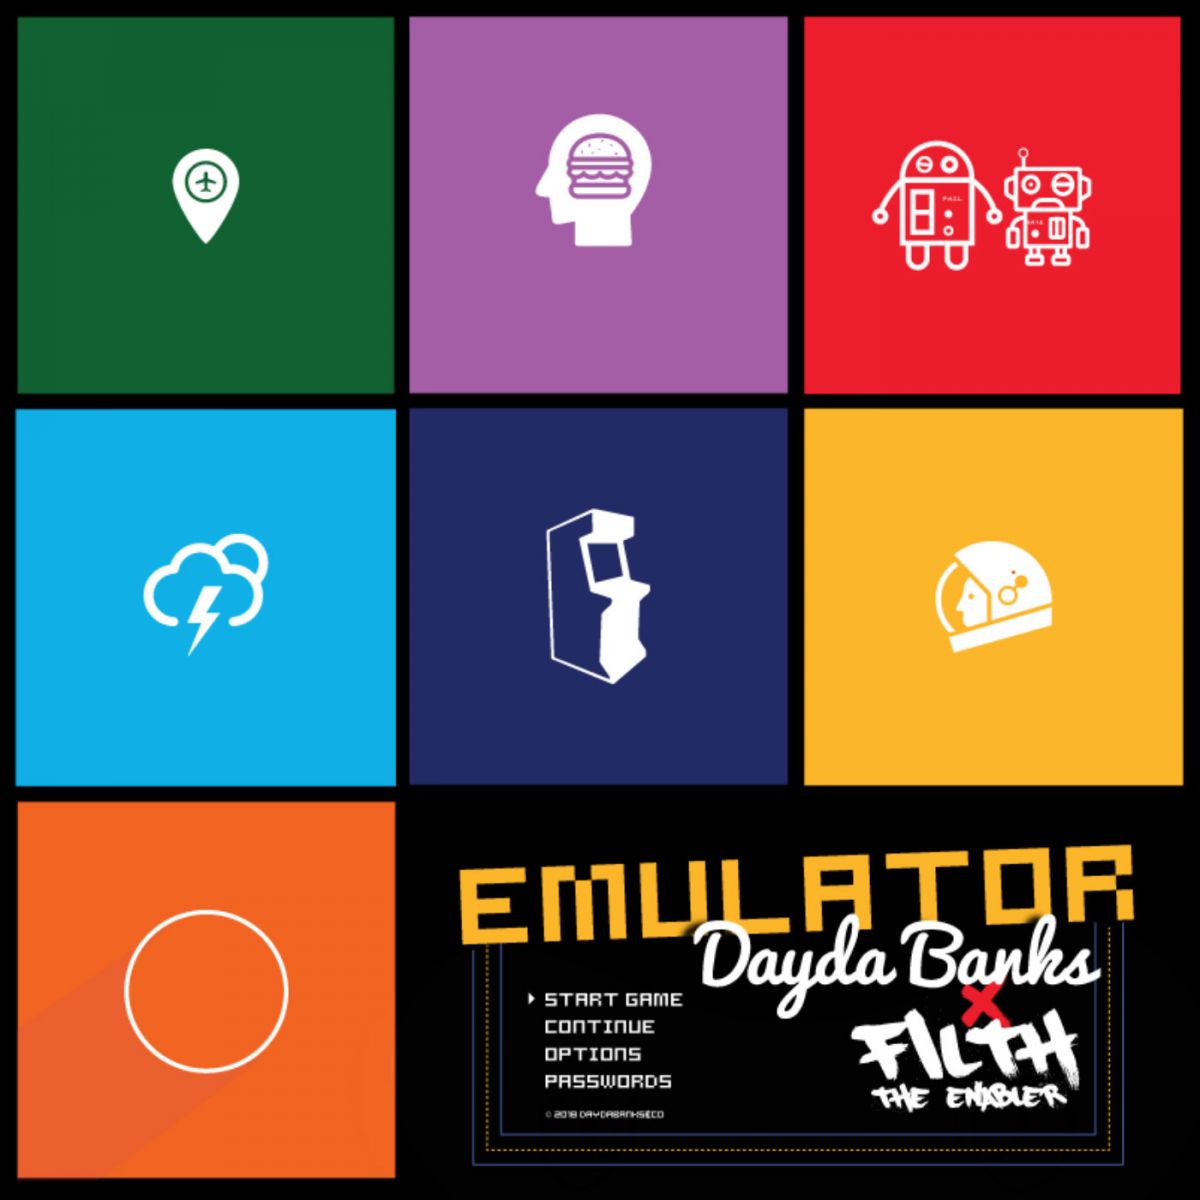 Dayda Banks and 
                            the Enabler - Emulator